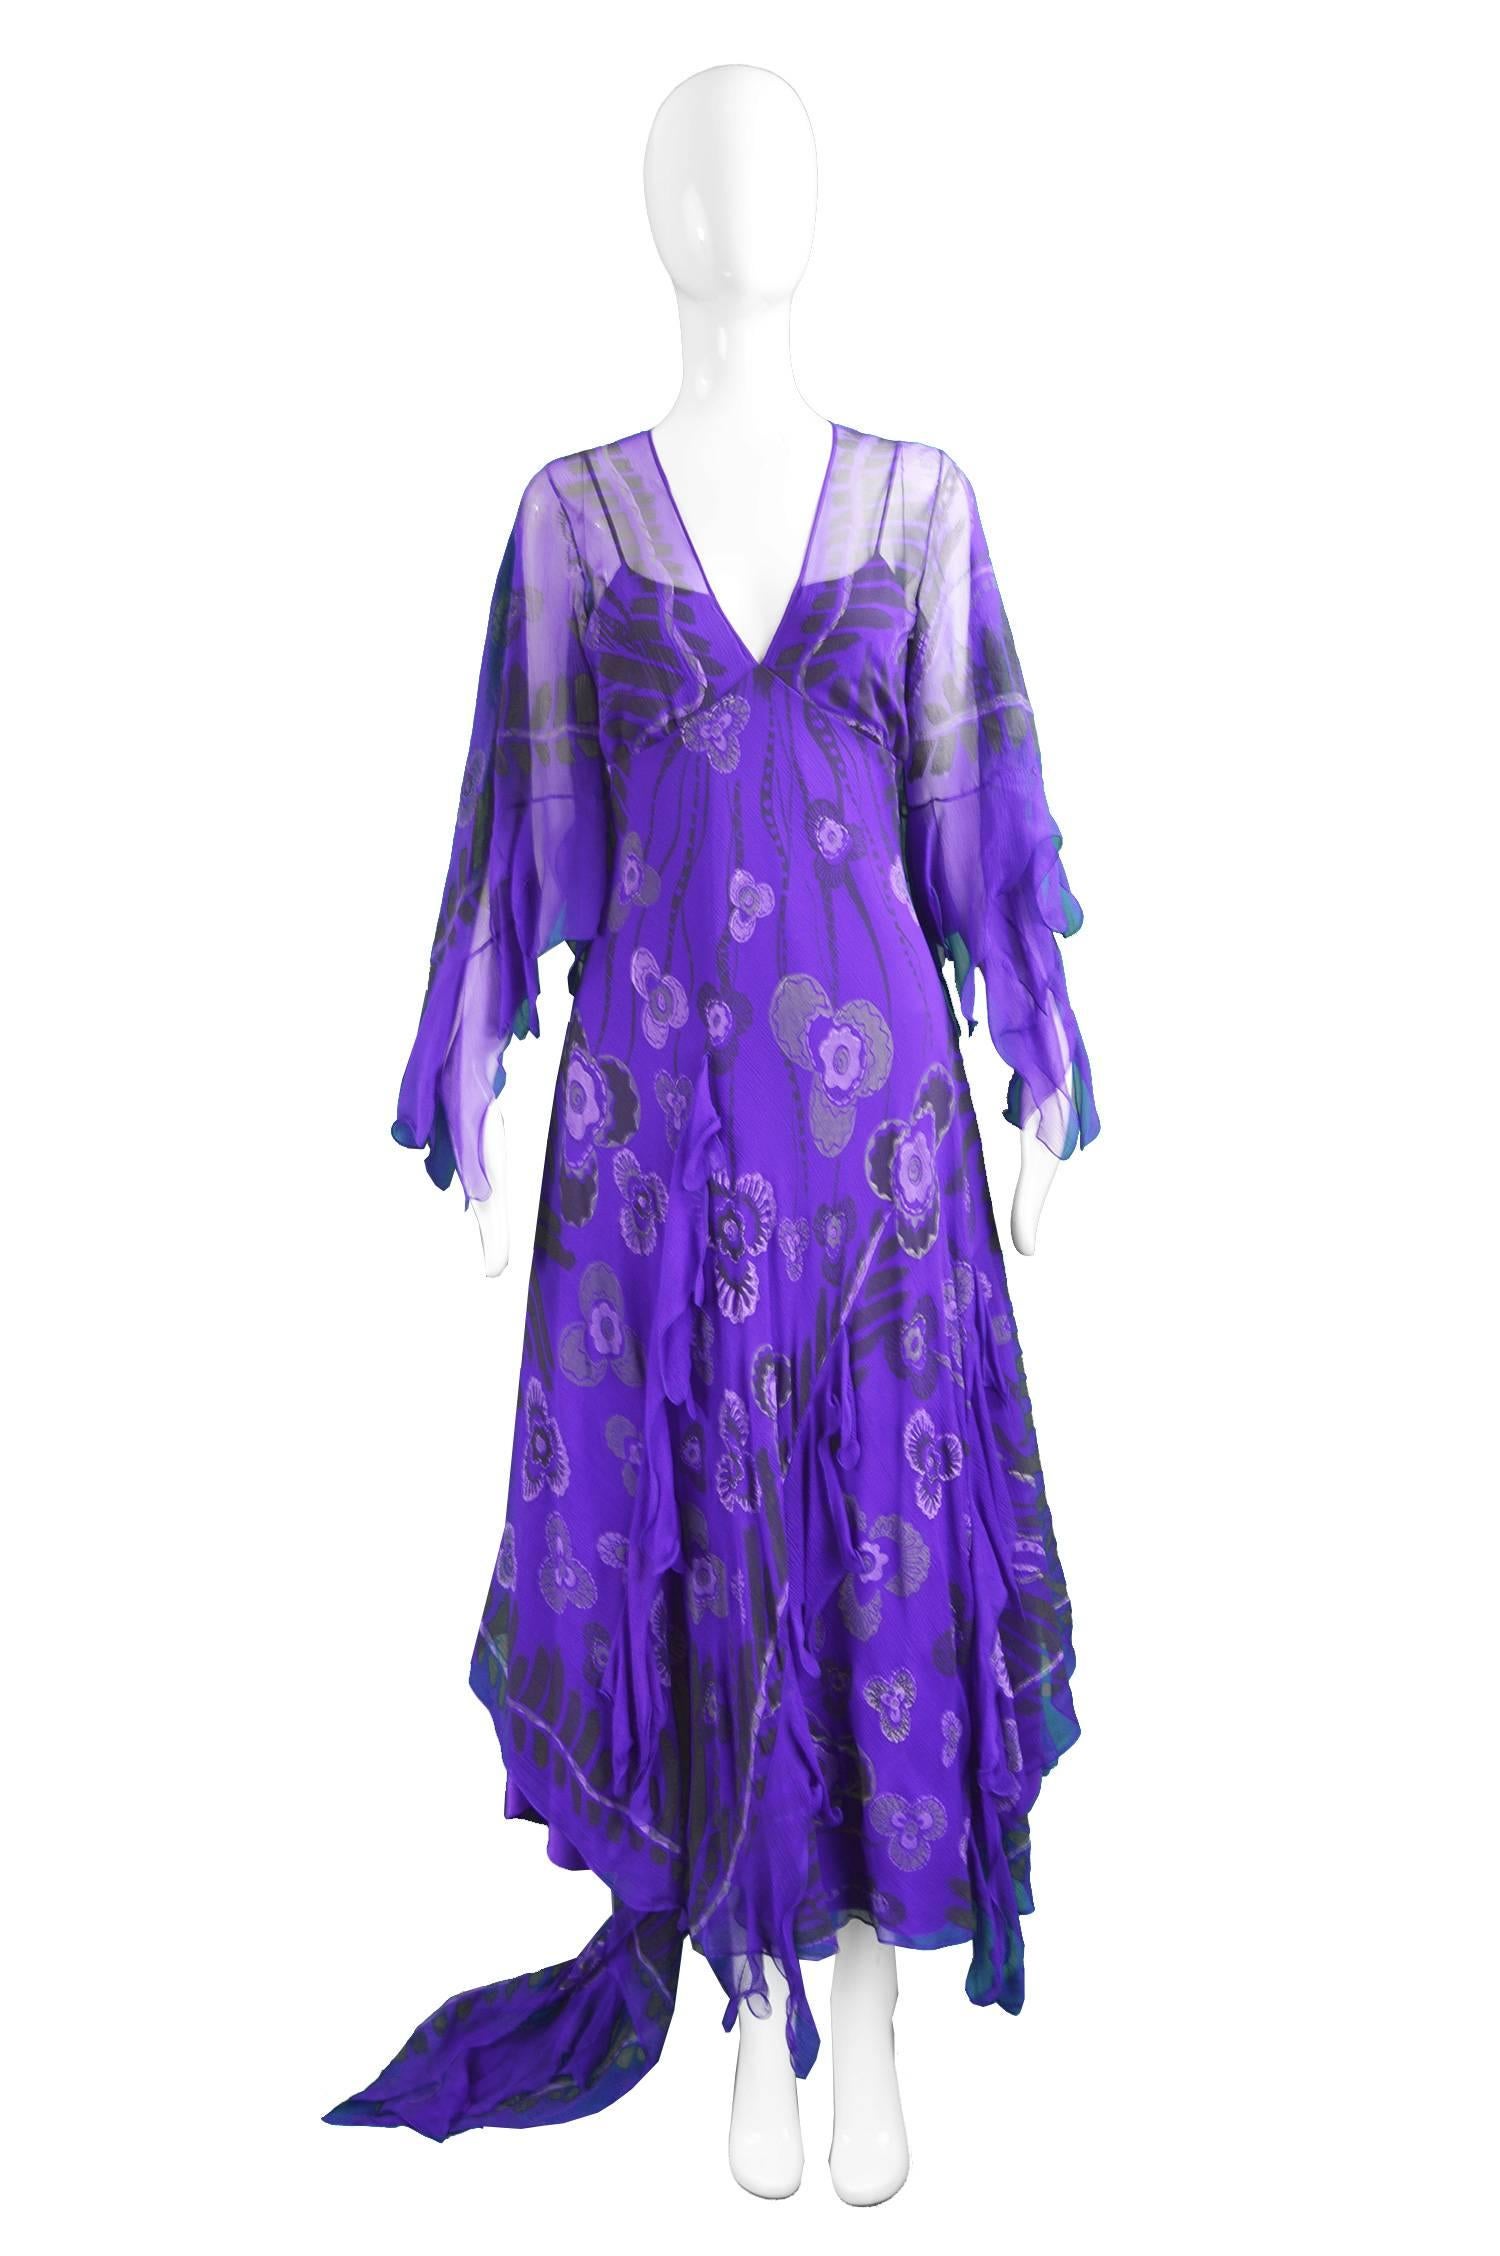 Zandra Rhodes Purple Floral Silk Chiffon Dress with Floor Length Train, c. 1970s-80s

Estimated Size: UK 10-12/ US 6-8/ EU 38-40. Please check measurements.
Bust - 35” / 89cm
Waist - 32” / 81cm
Hips - Up to 48” / 121cm
Length (Bust to Hem) - 42” /